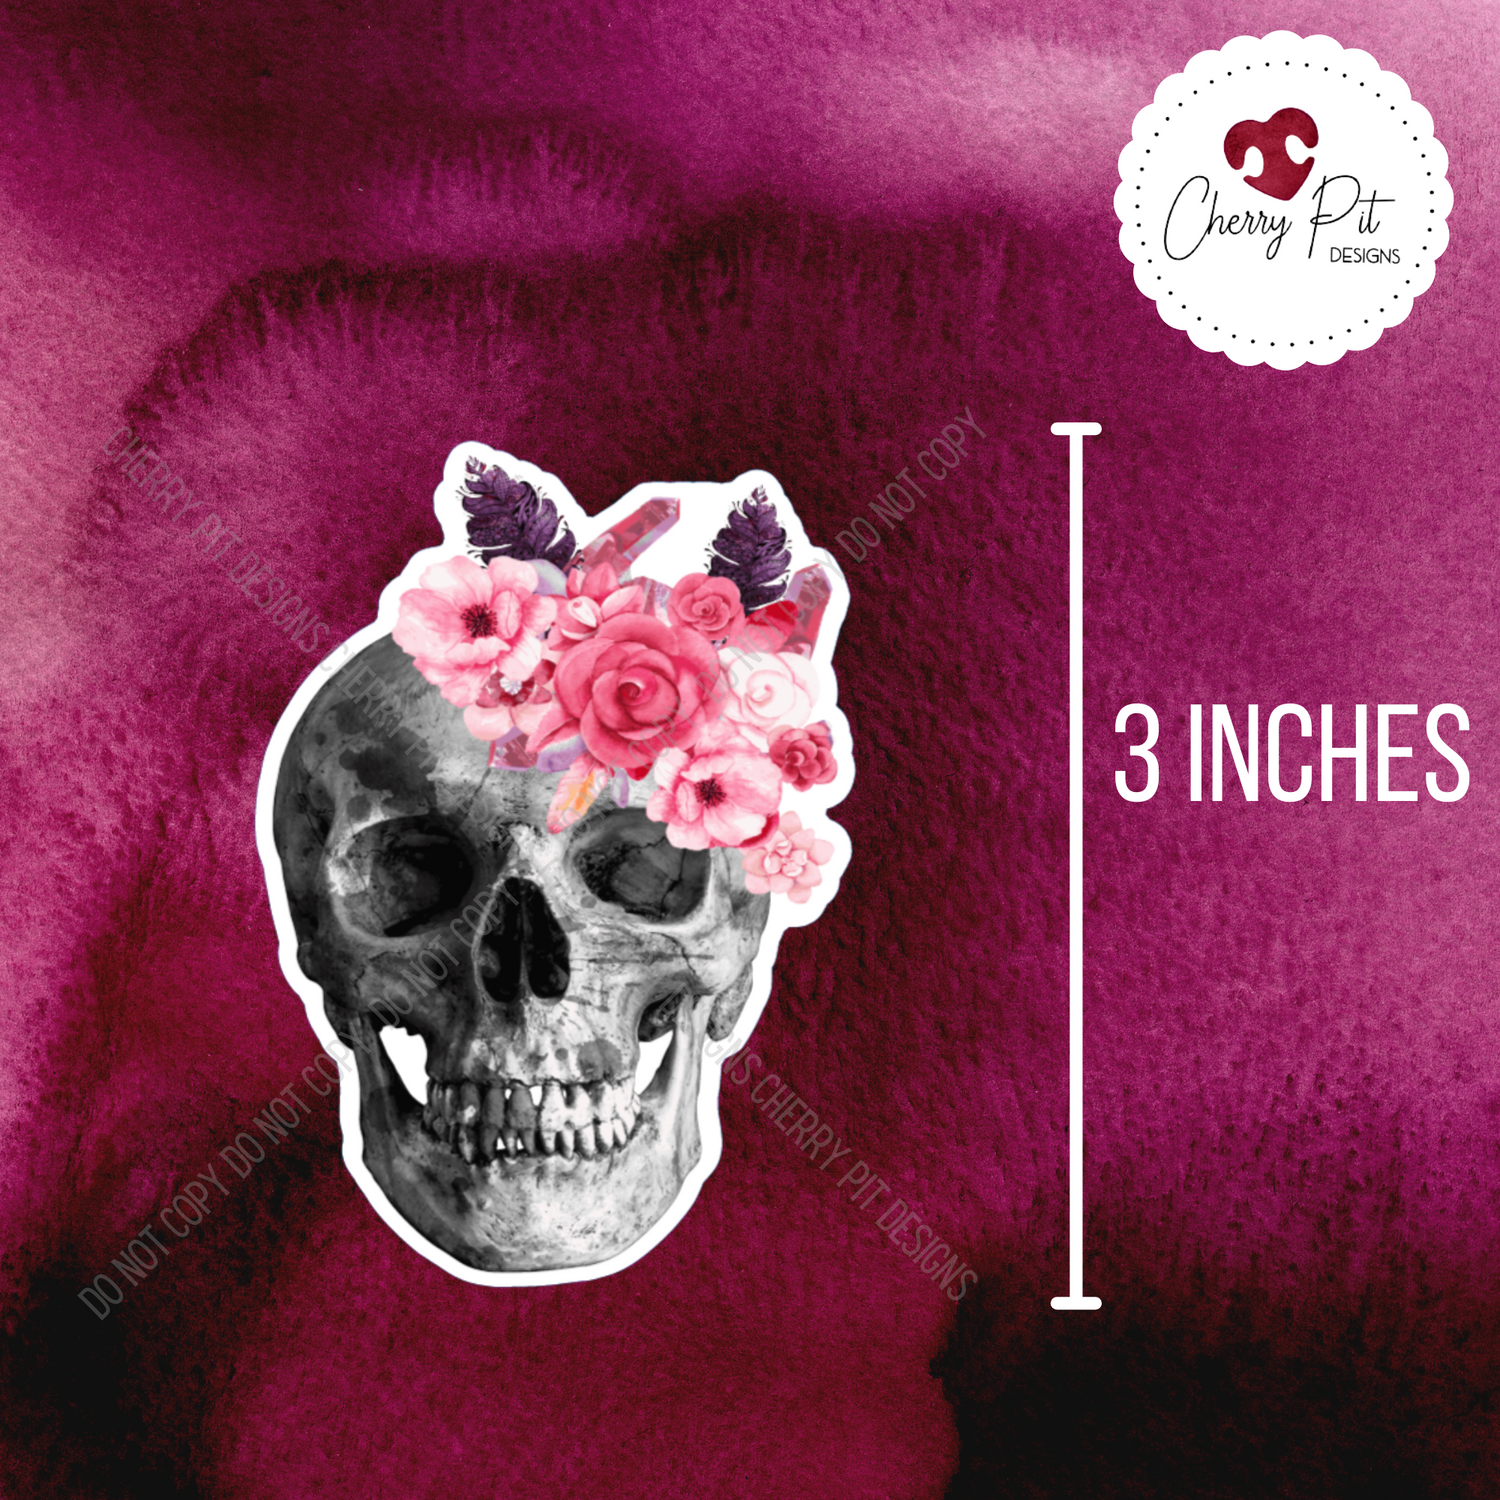 Floral Crystal Skull Vinyl Sticker Decal - Cherry Pit Designs